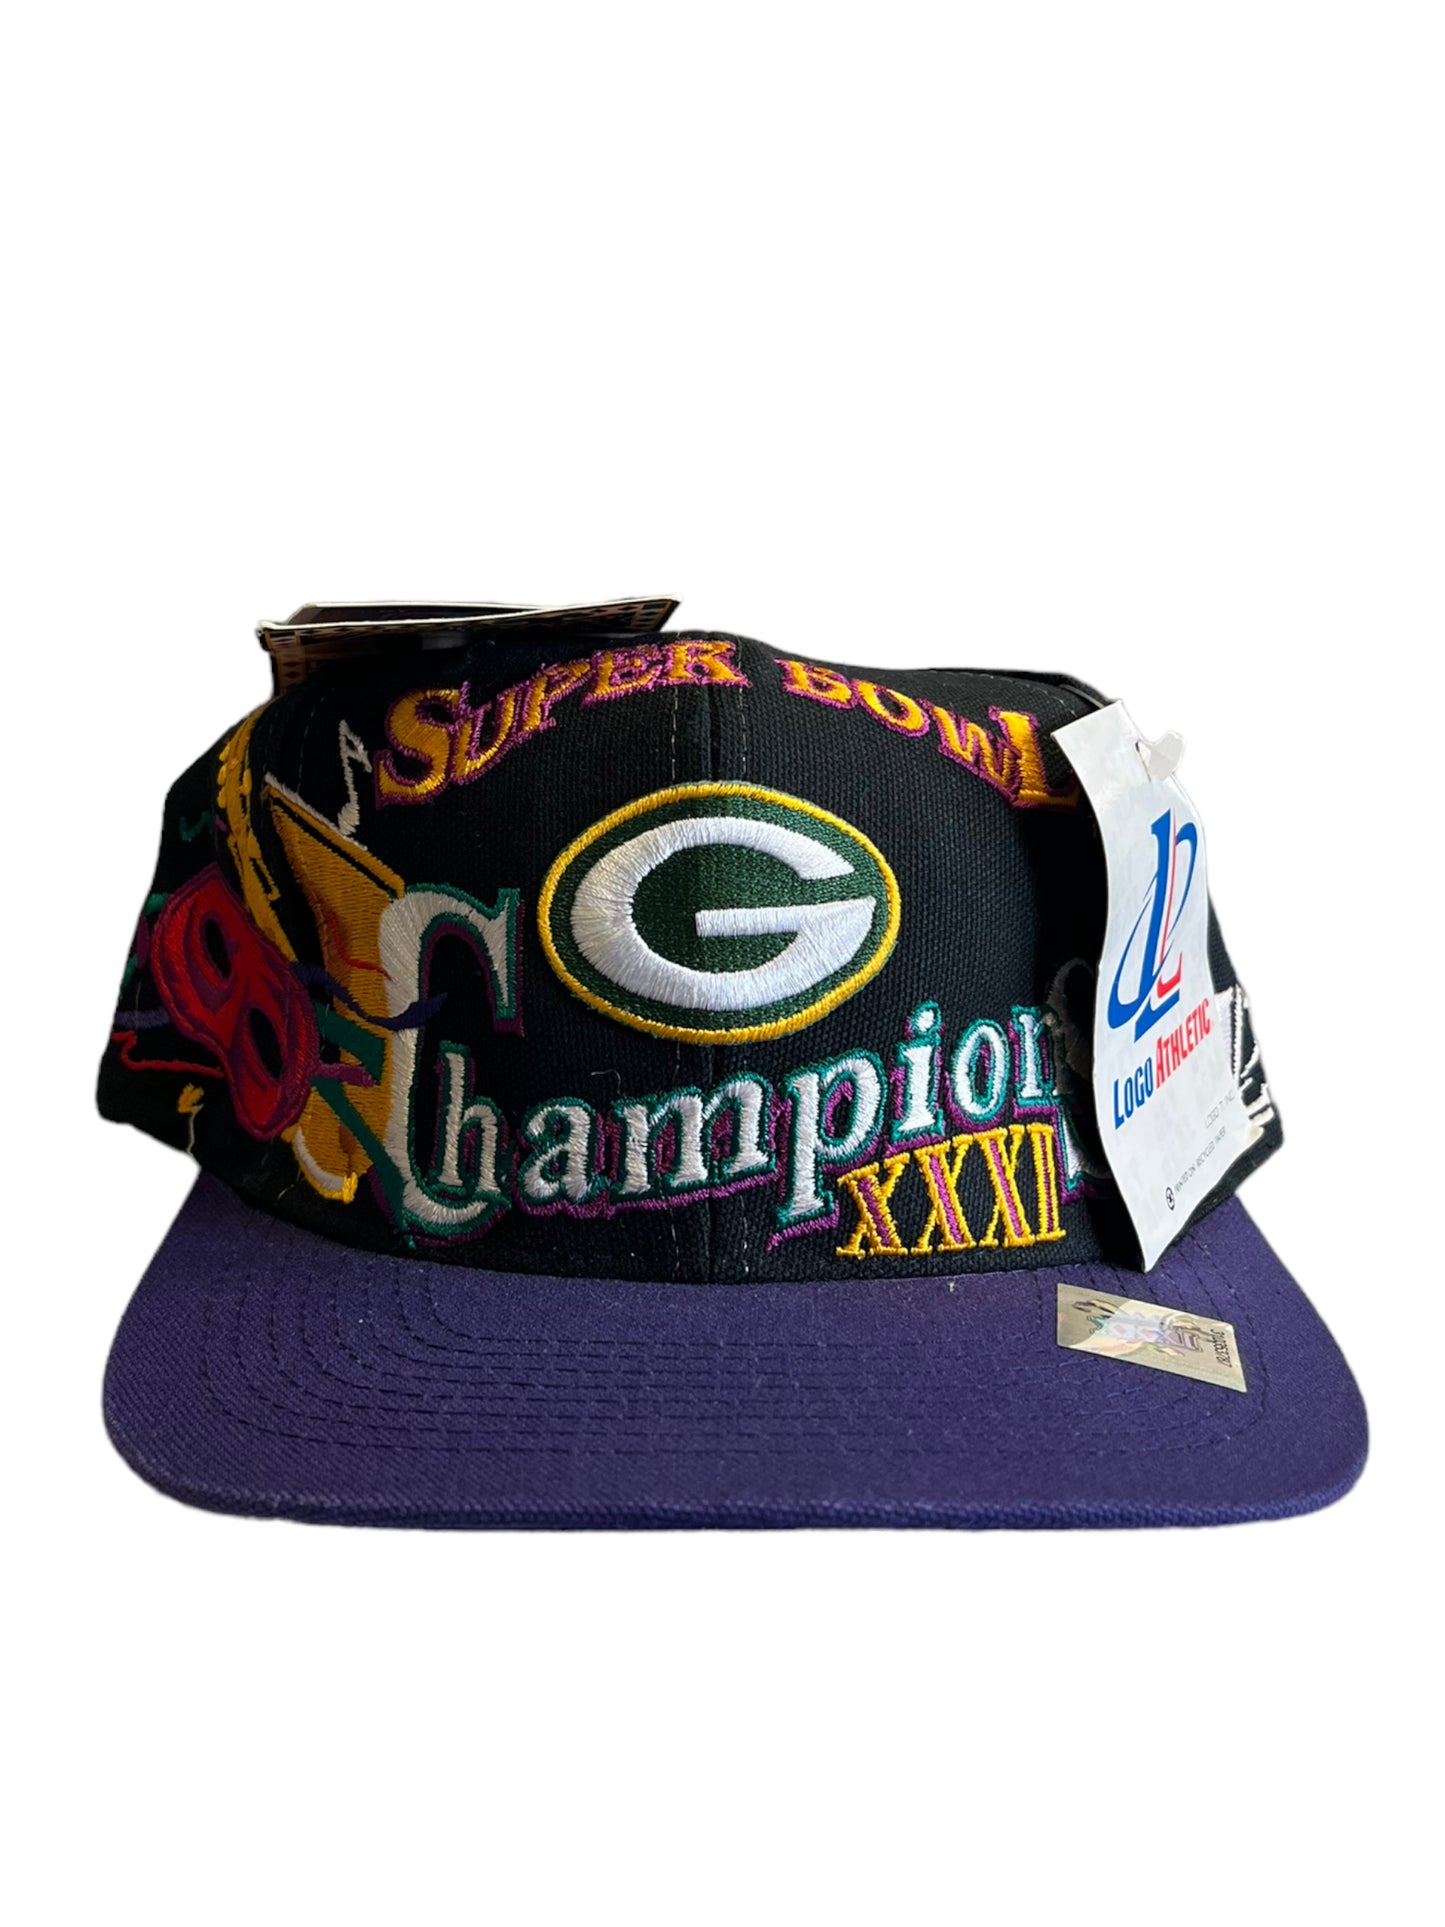 1997 Super Bowl XXXI Champions Green Bay Packers SnapBack Hat Brand New